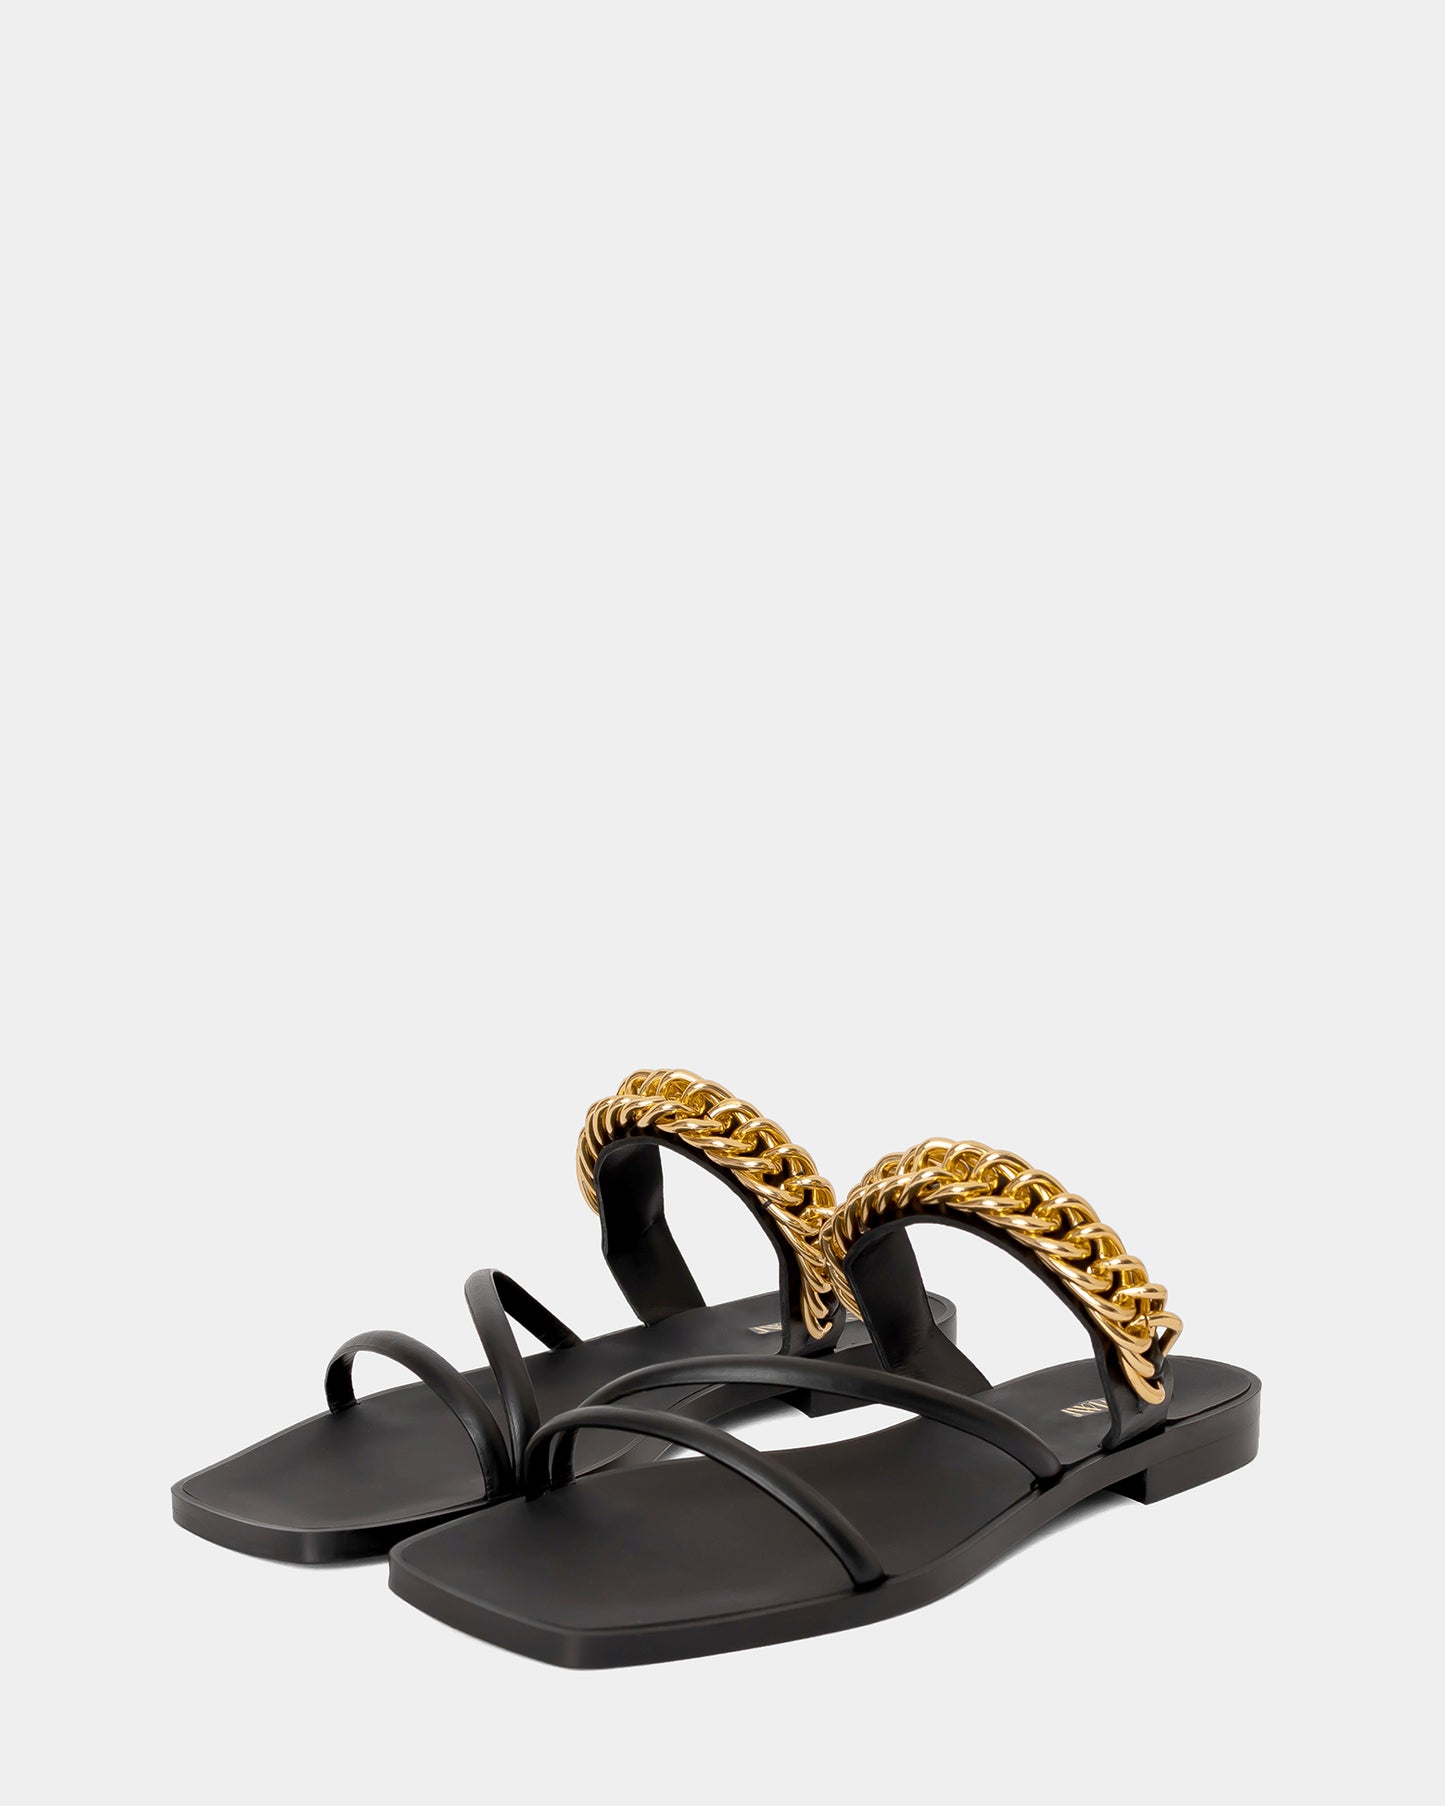 Black Peony Flat sandal